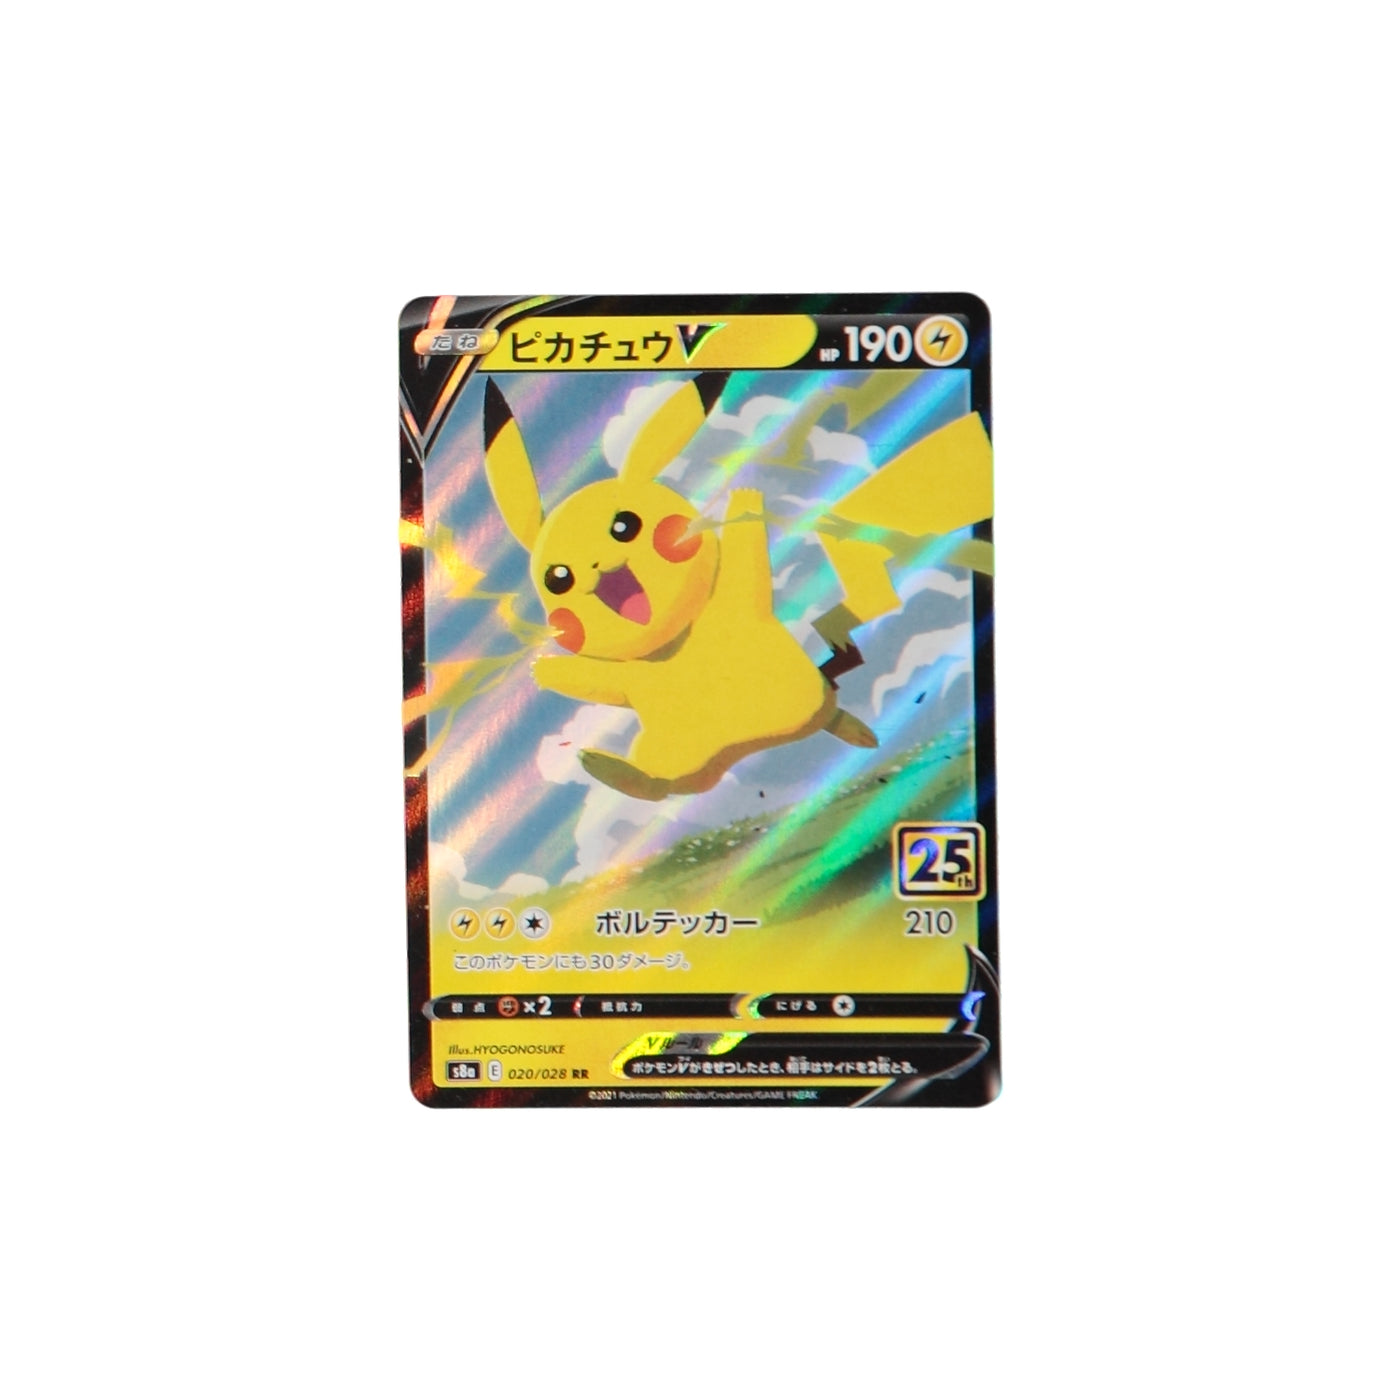 Pokemon TCG Japan S8A 020/028 Pikachu V Card